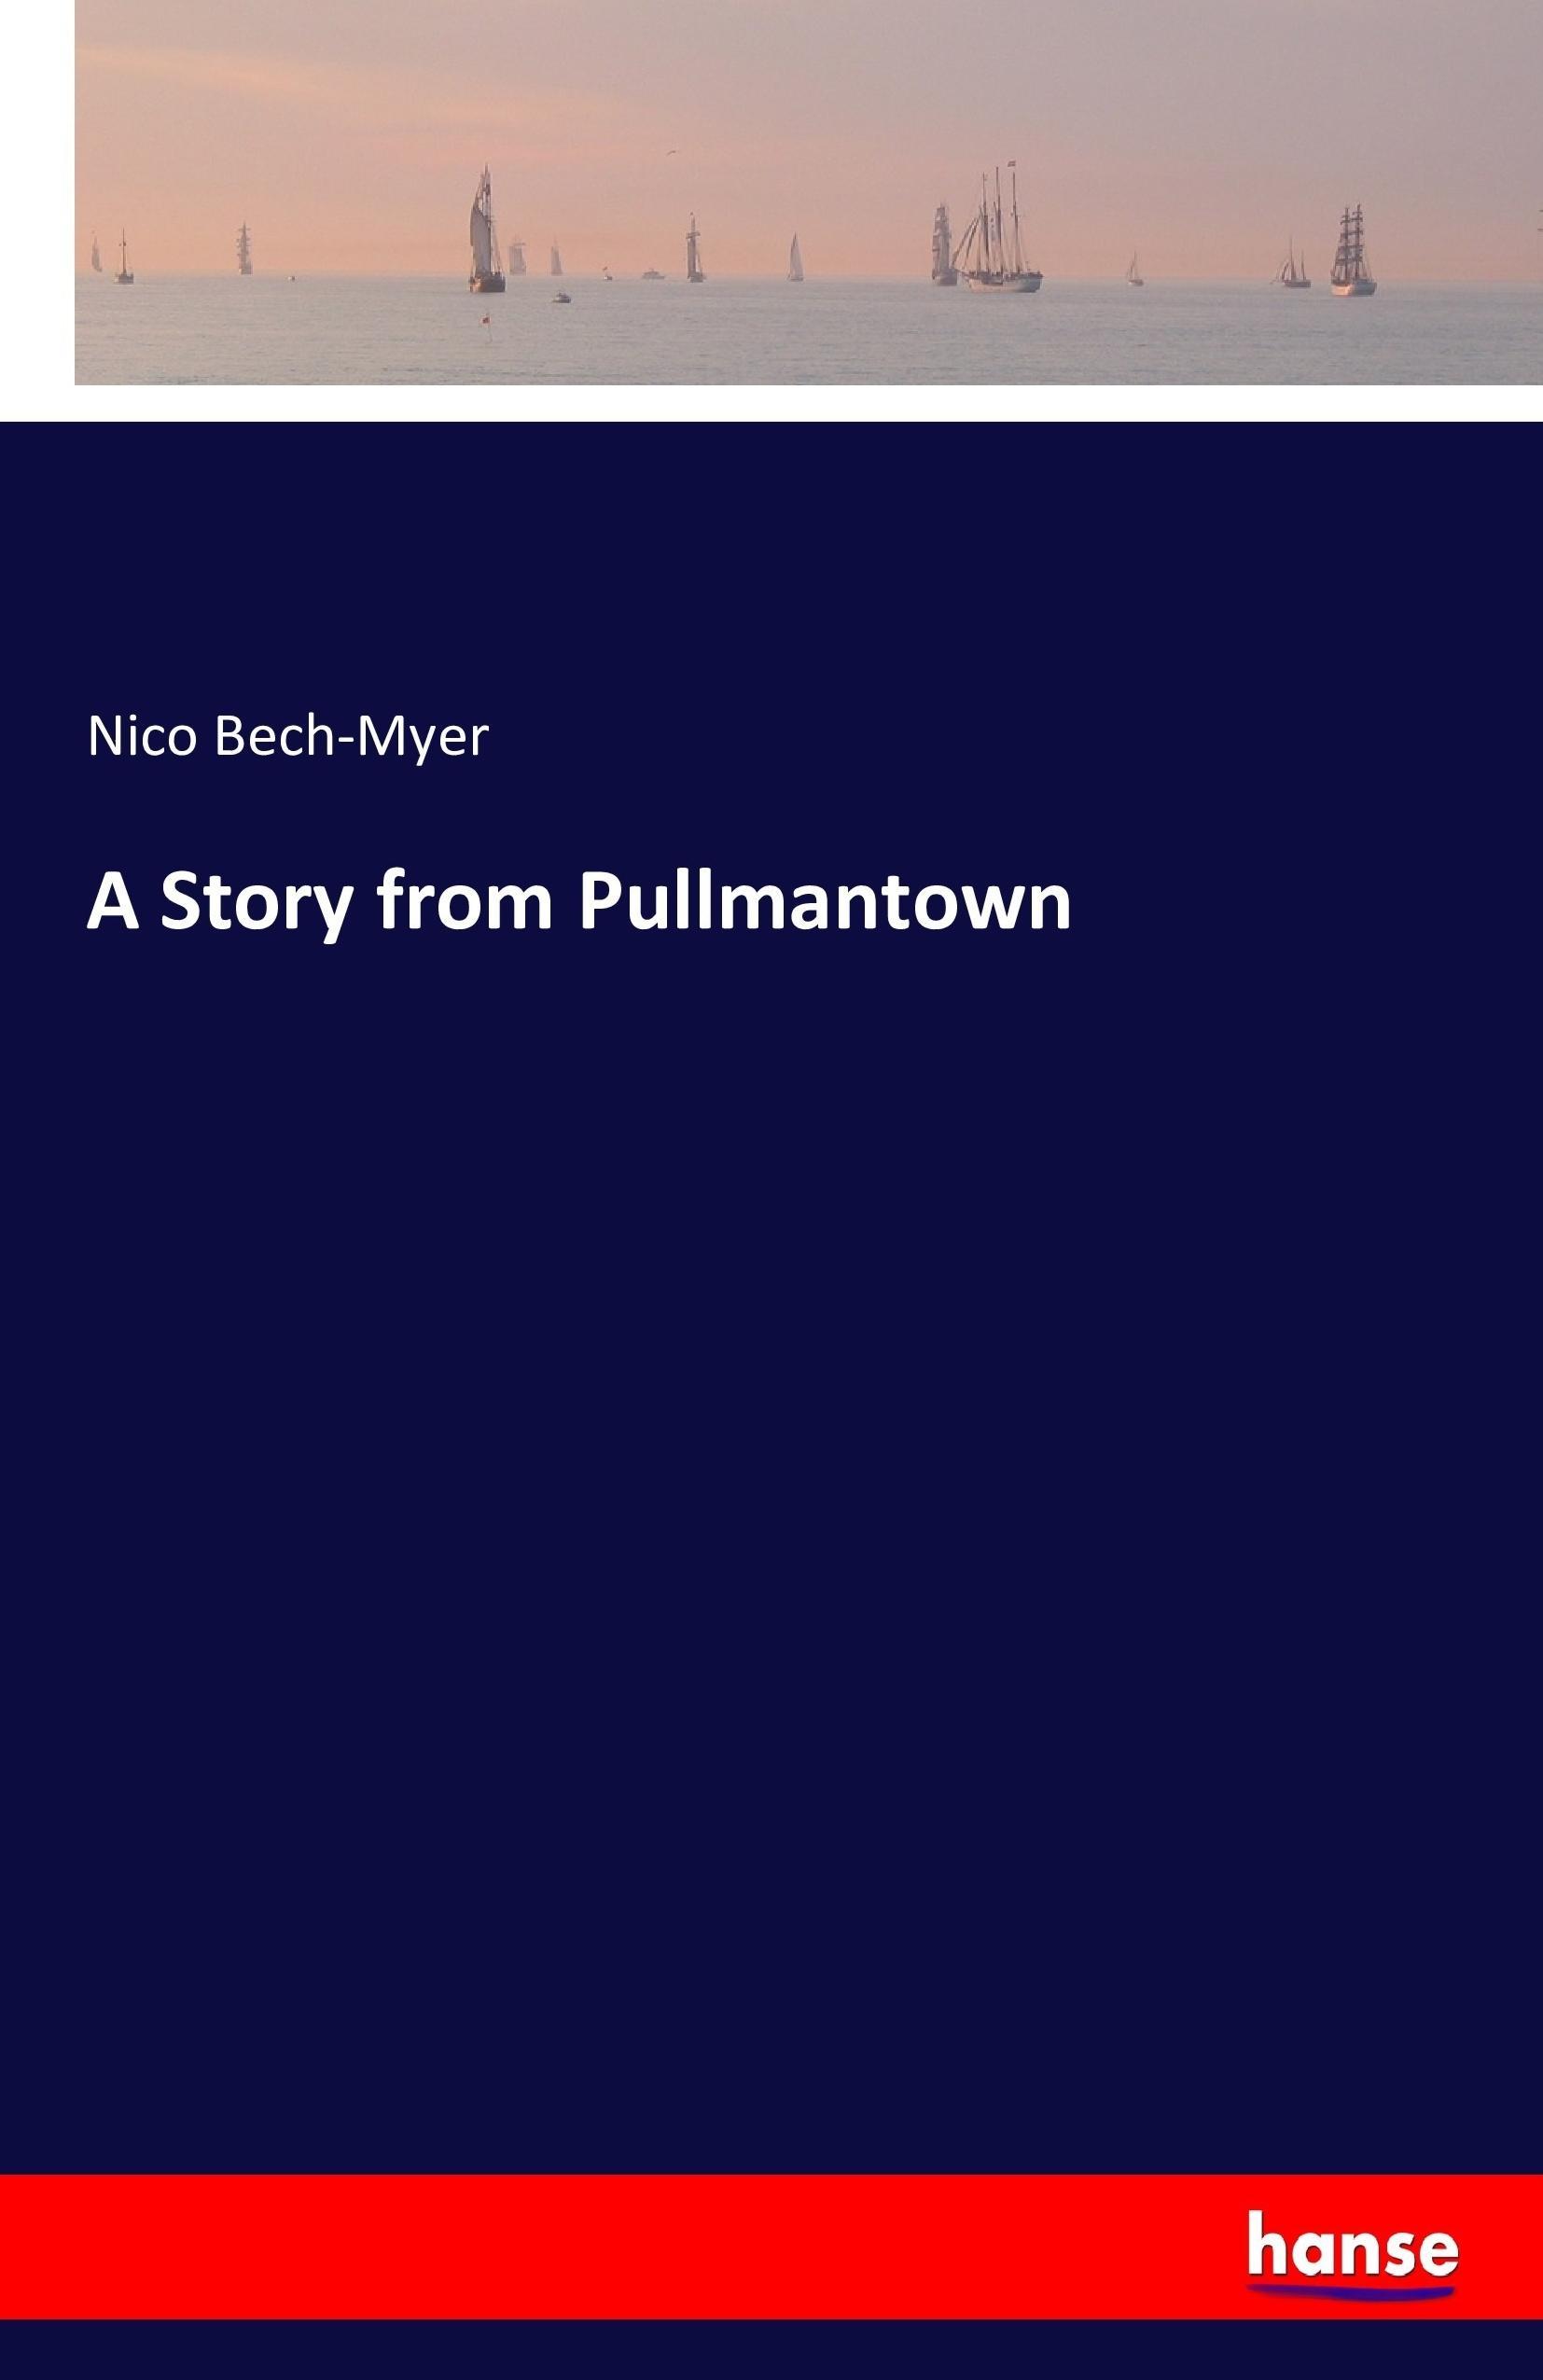 Une histoire de Pullmantown Nico Bech-Myer - Photo 1/1